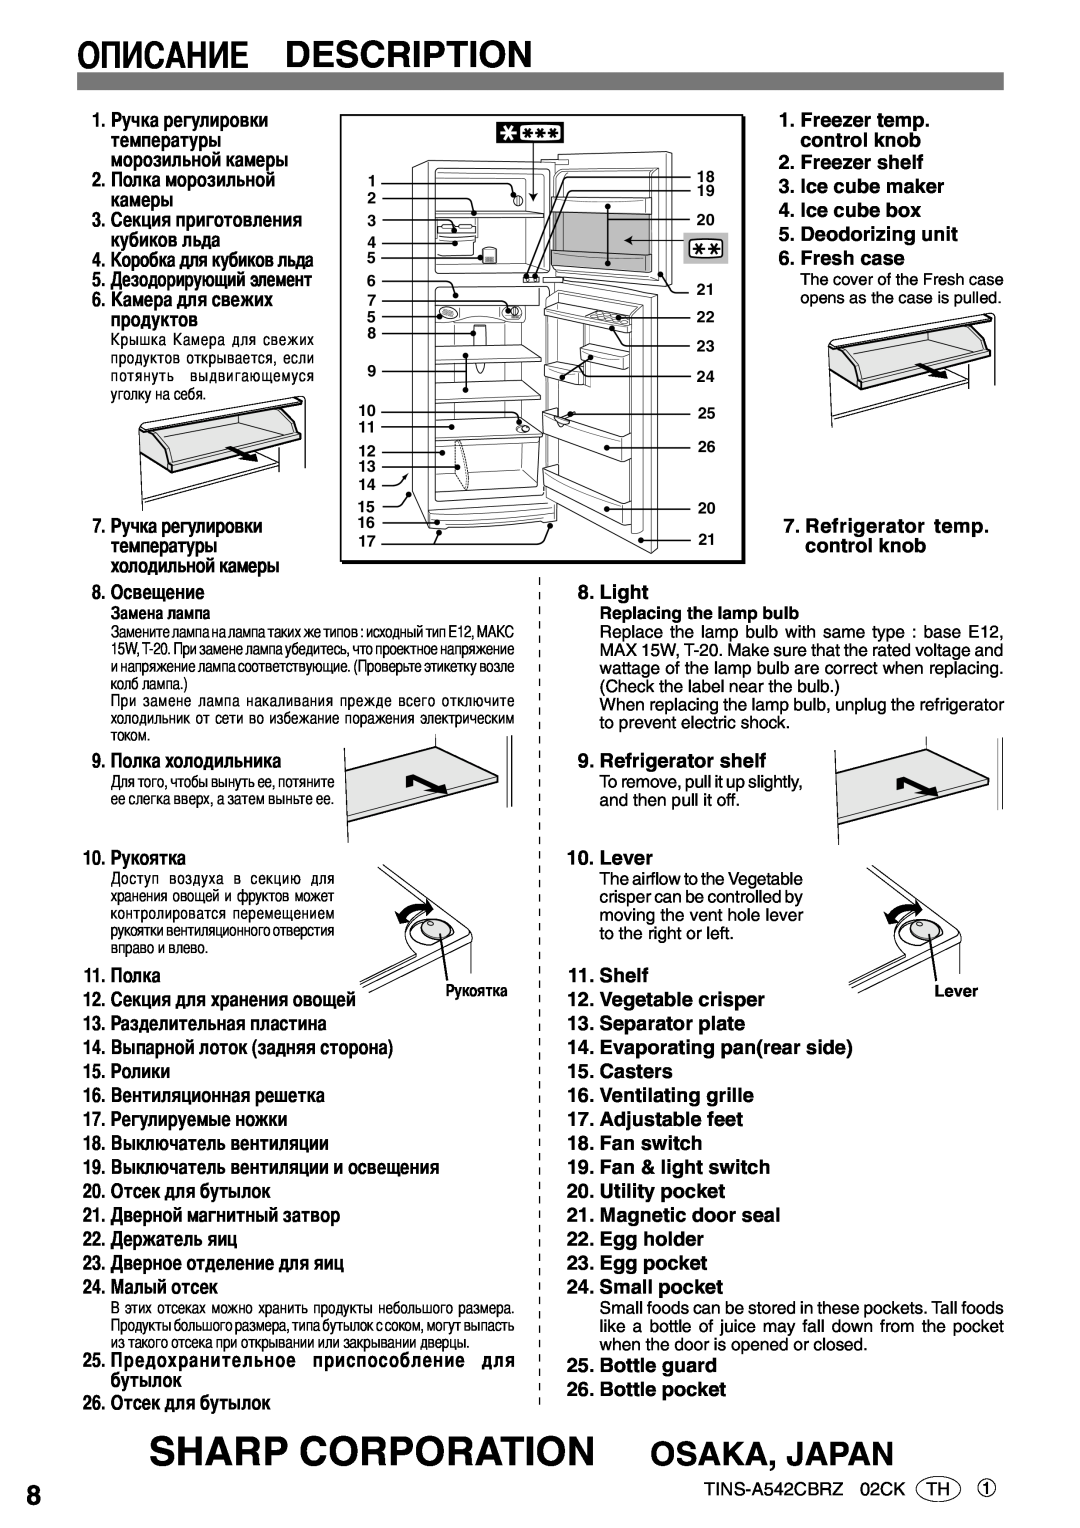 Sharp SJ-43L-A2, SJ-47L-A2 operation manual Description, Sharp Corporation Osaka, Japan 